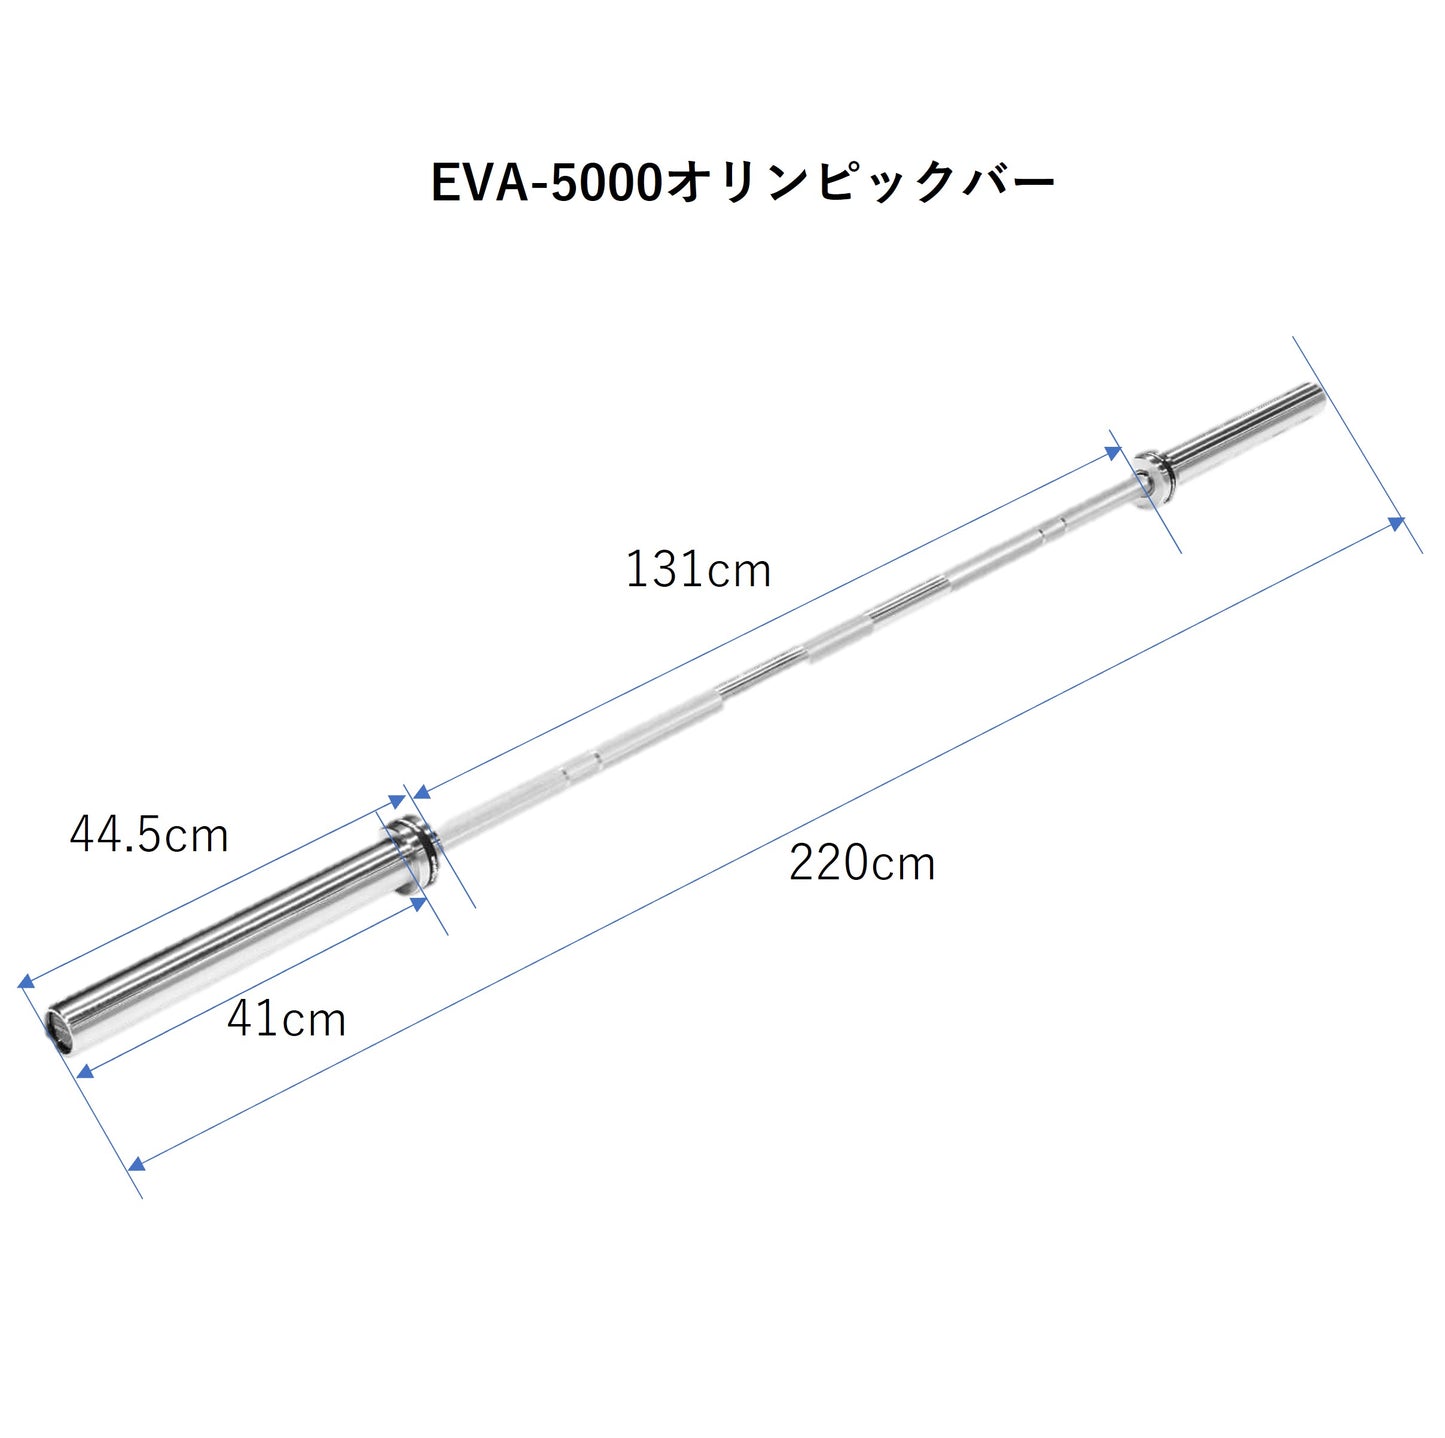 EVOLGEAR オリンピックバー EVA-5000